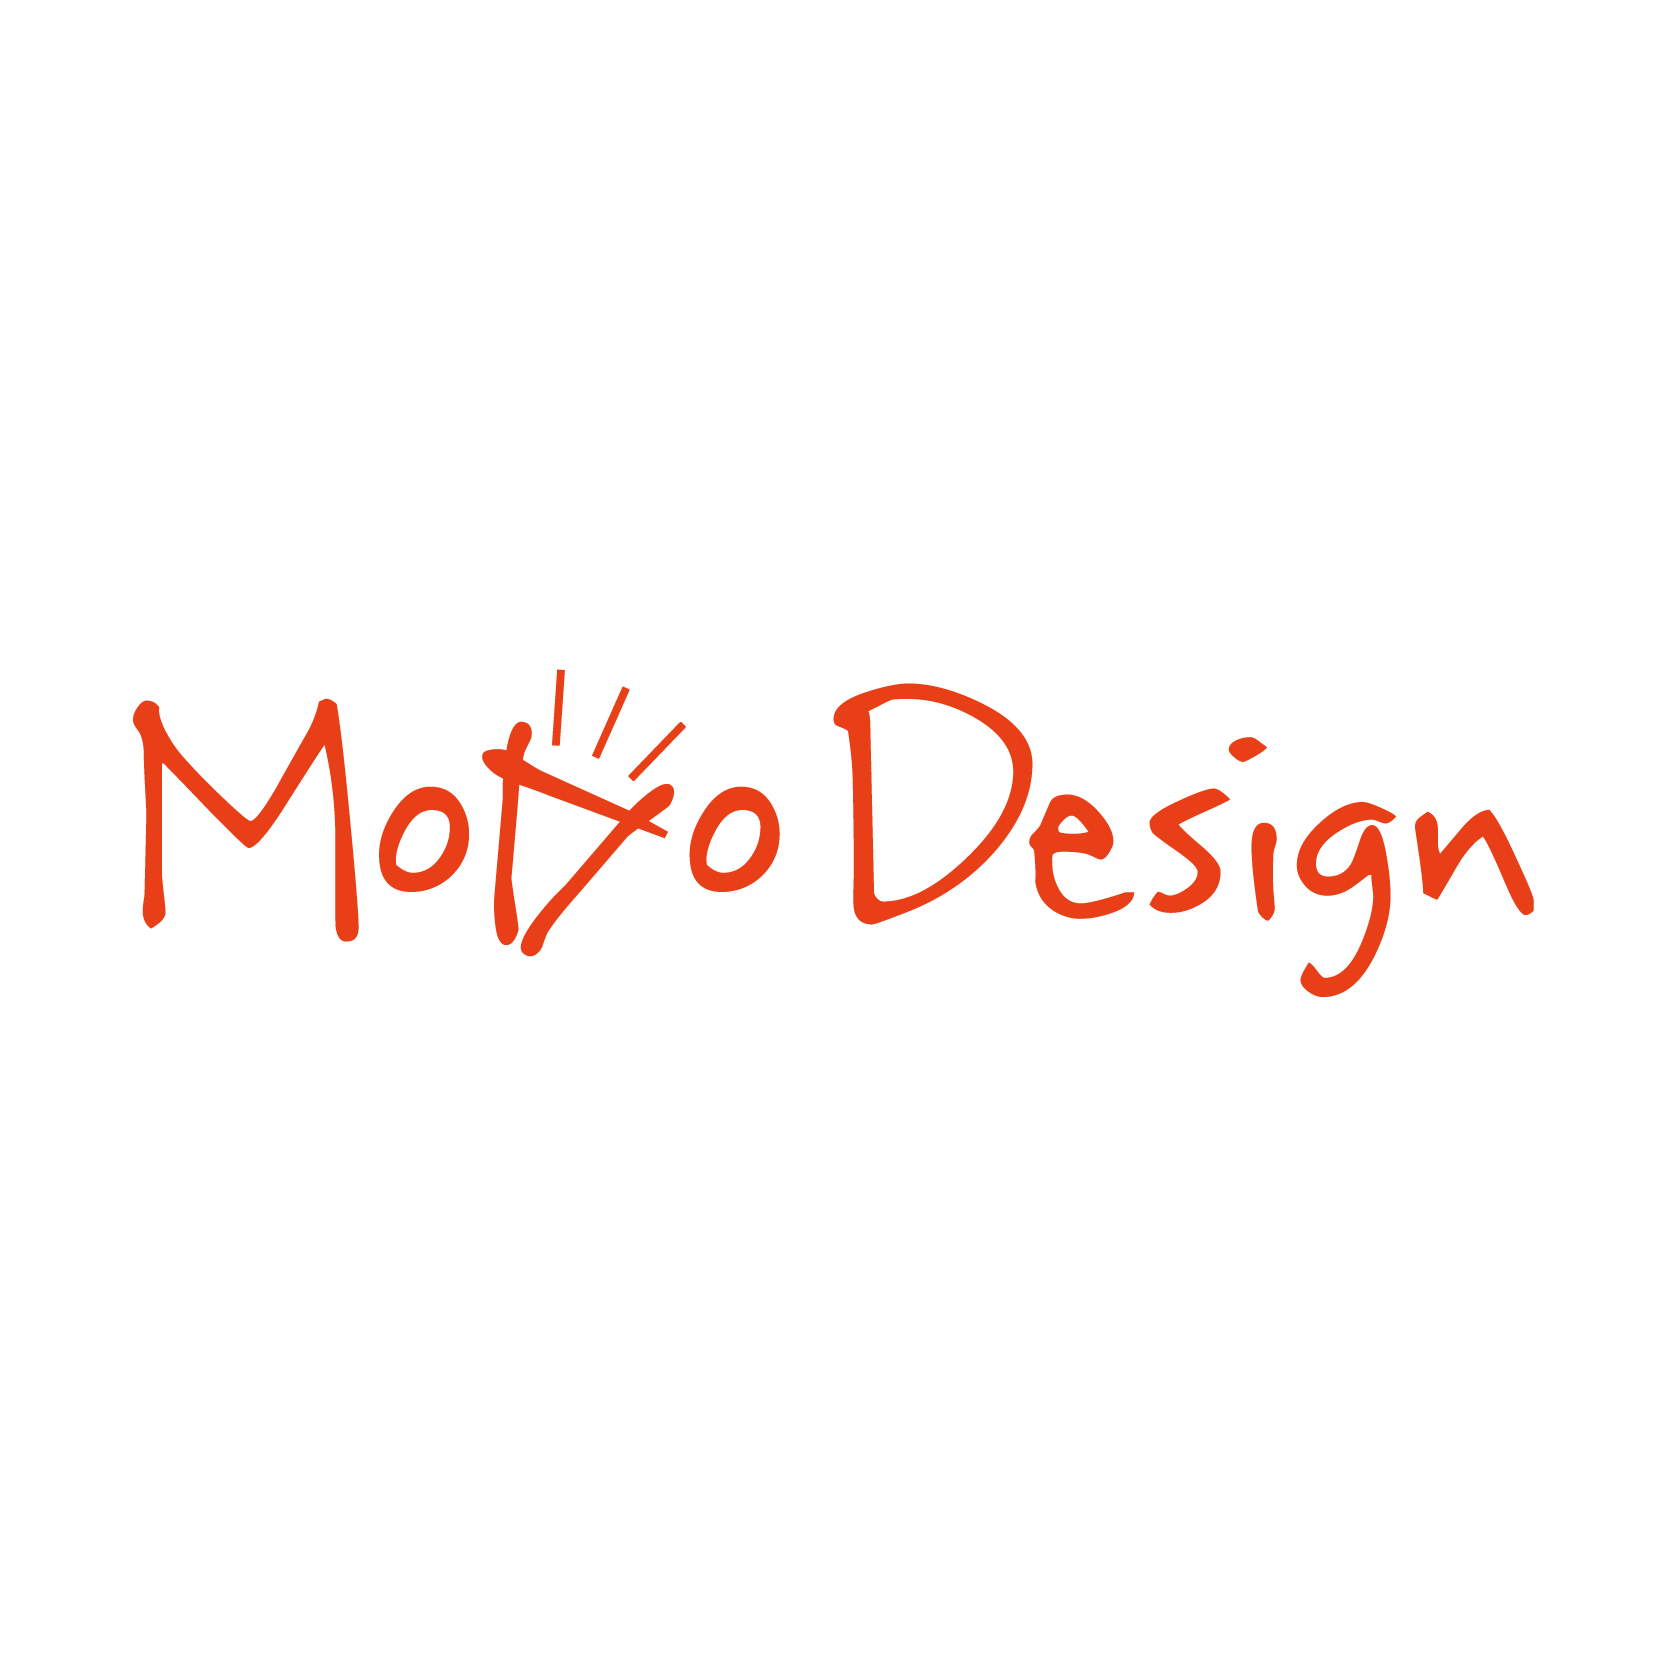 Motto Design